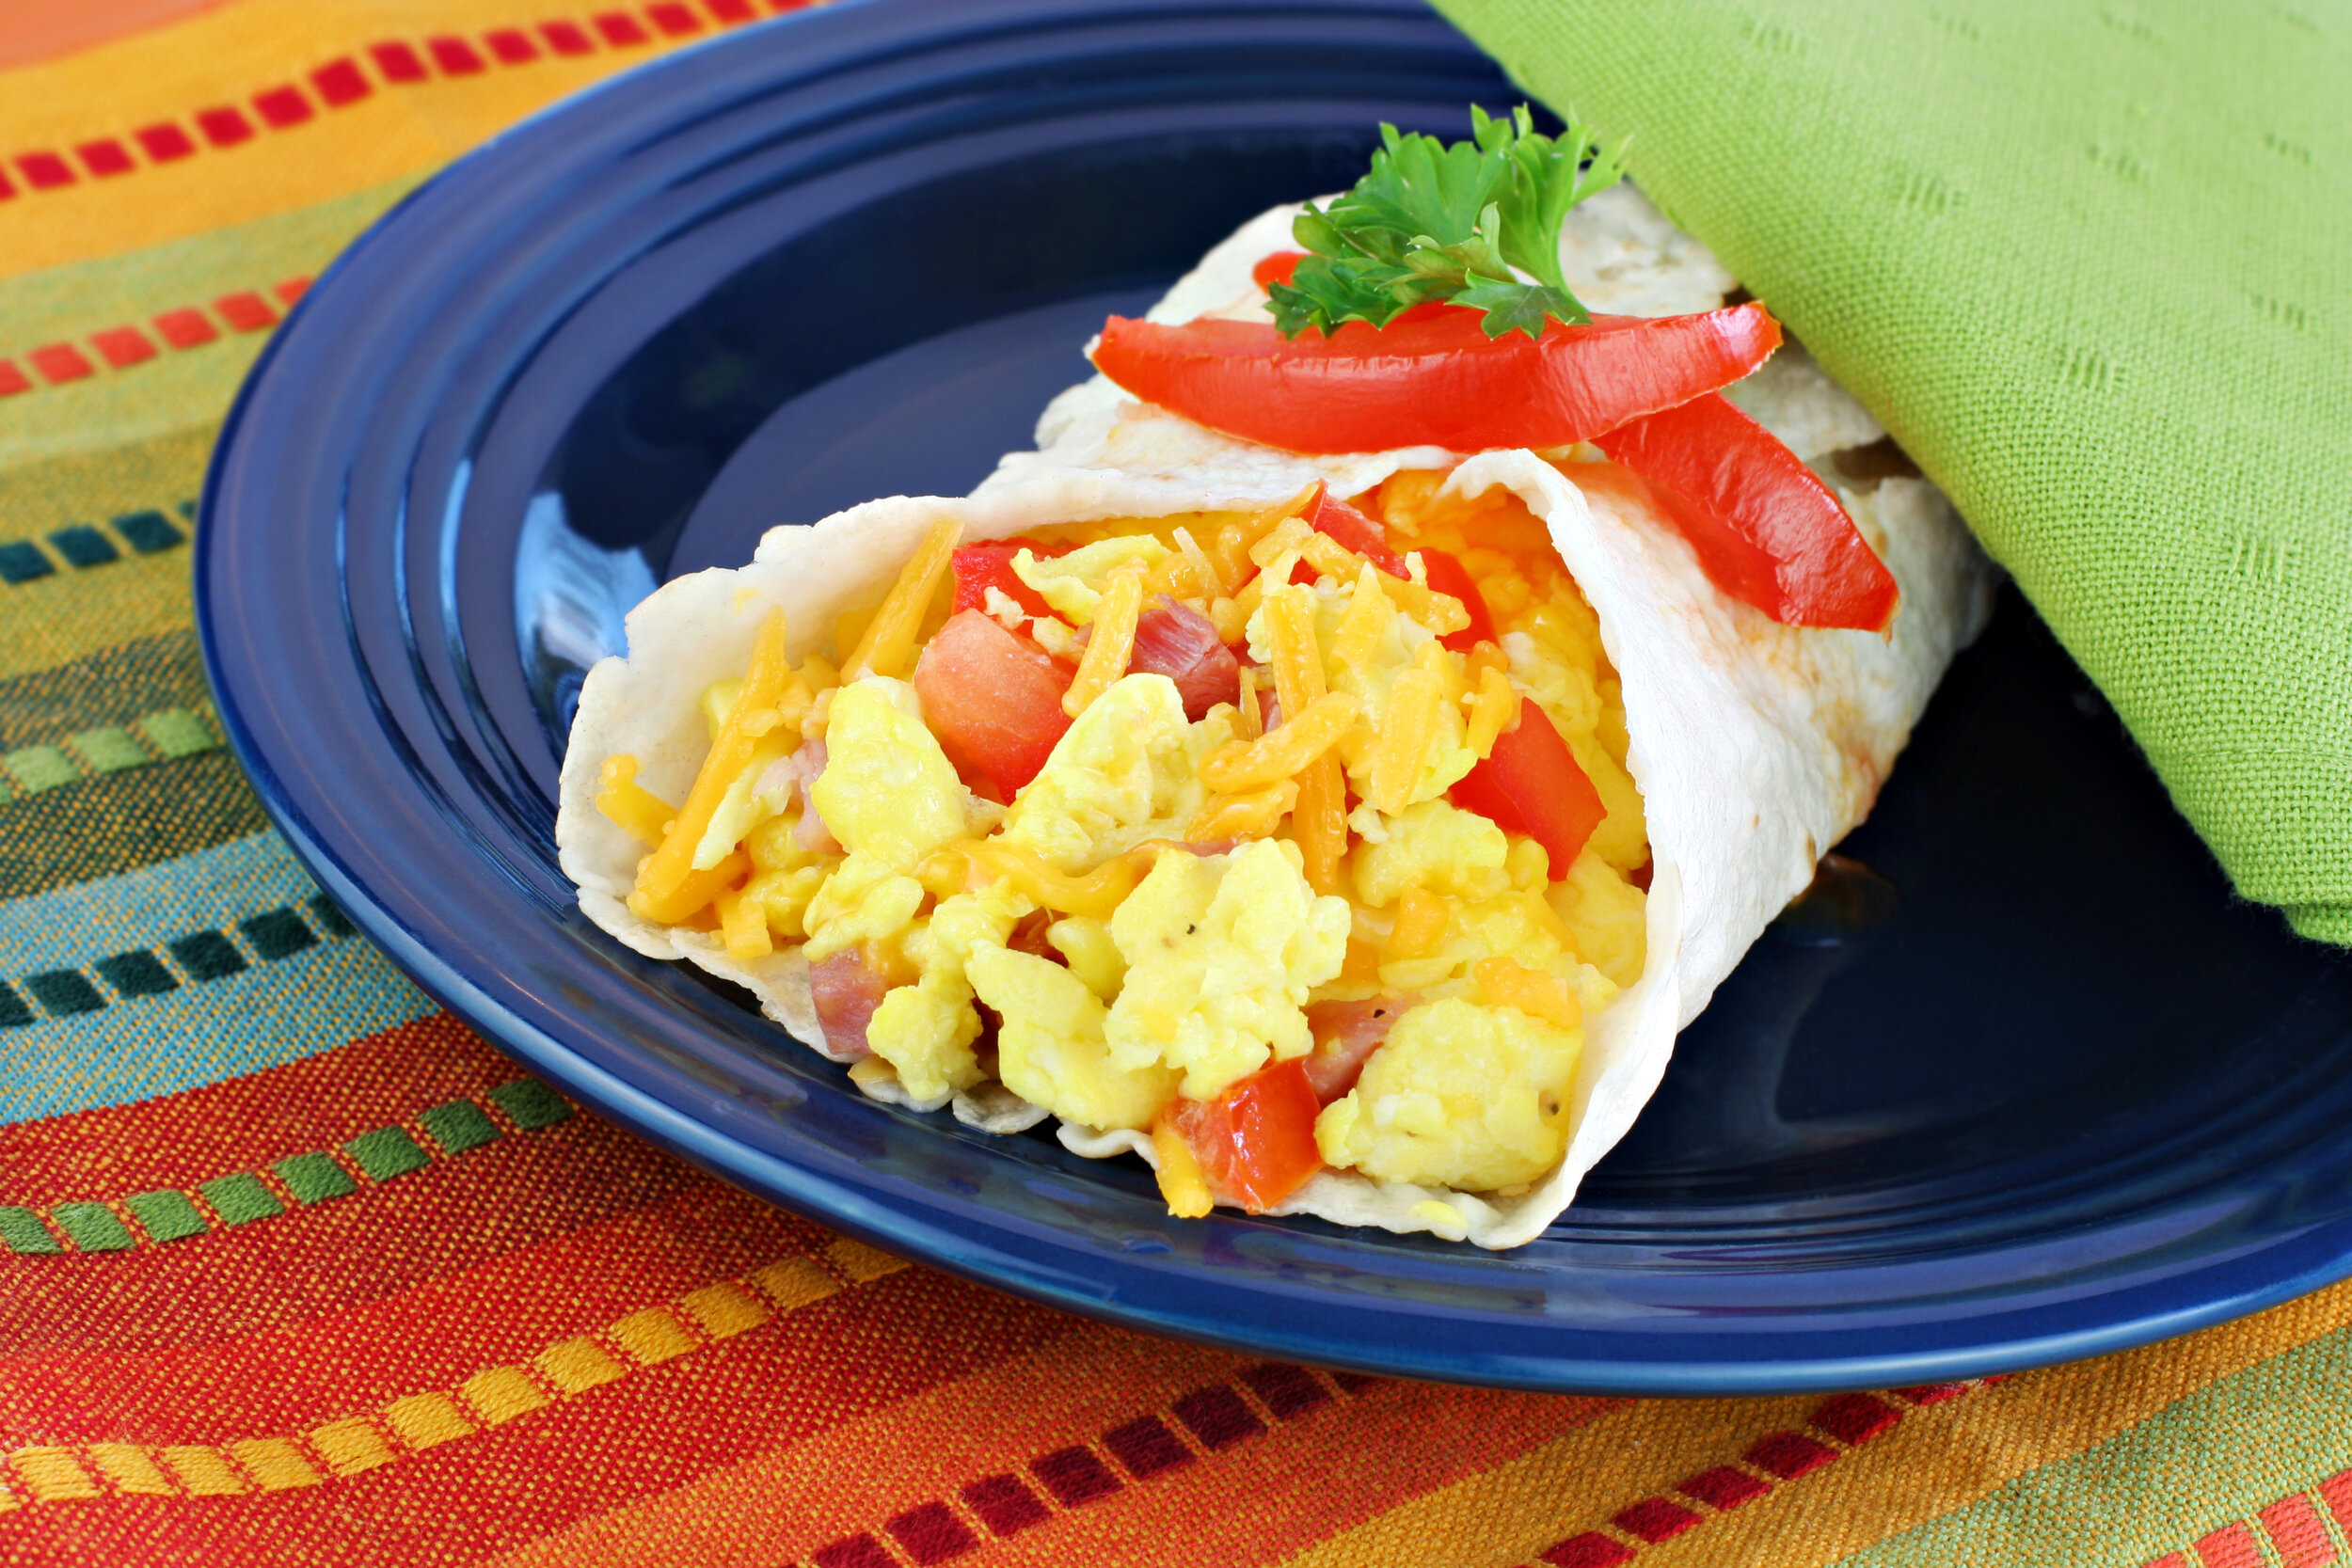 bigstock-Breakfast-Egg-Burrito-7699066.jpg